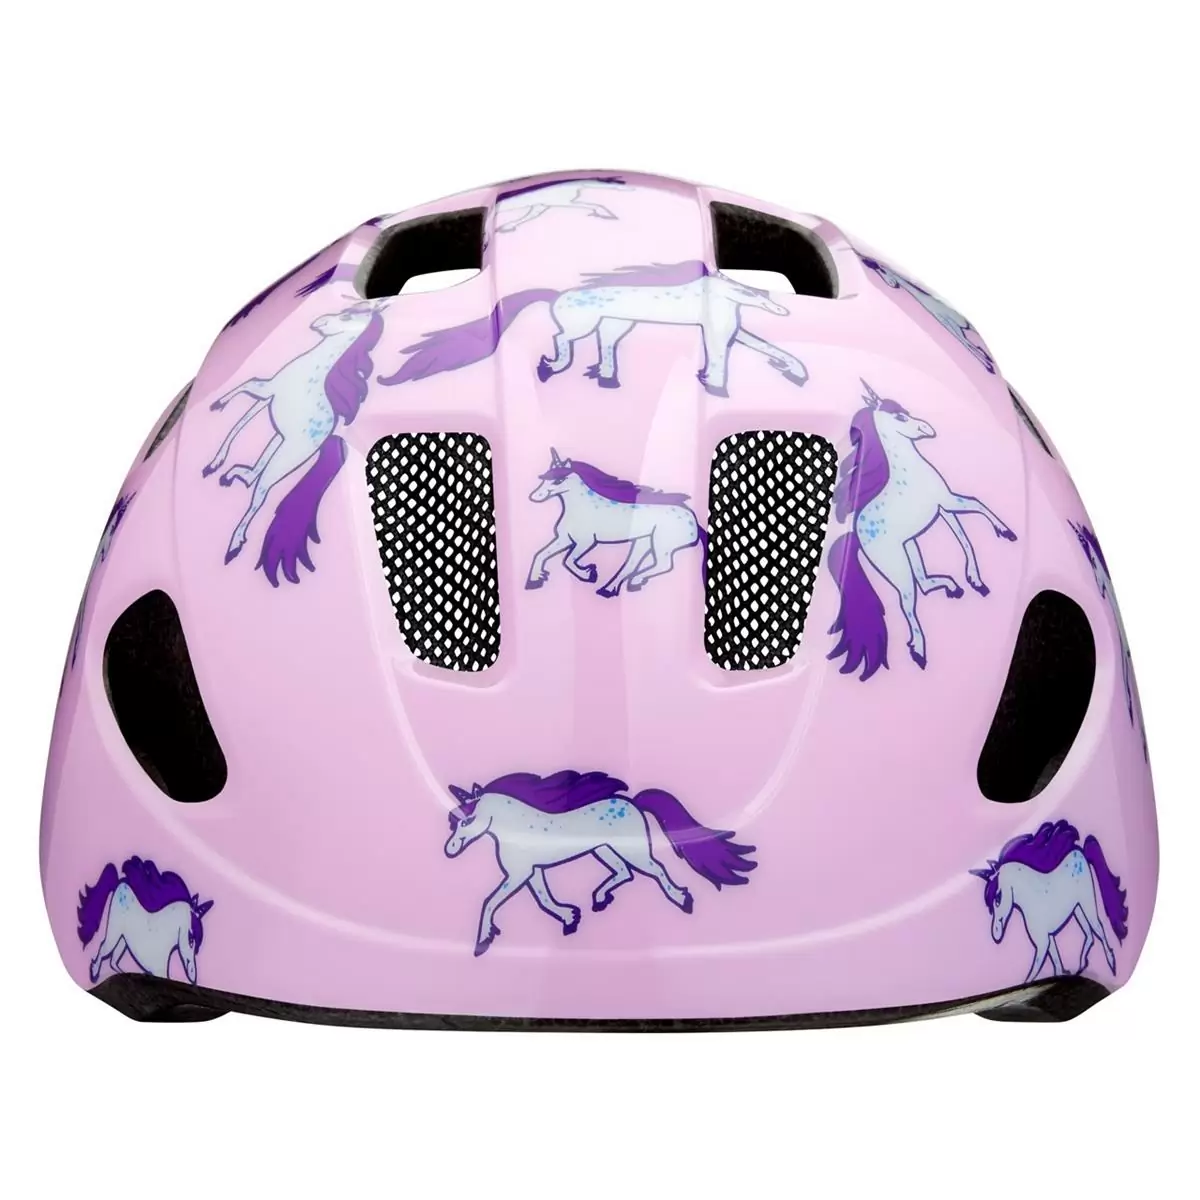 Nutz Kids Helmet KinetiCore CE Unicorn Pink/White One Size (50-56cm) #1